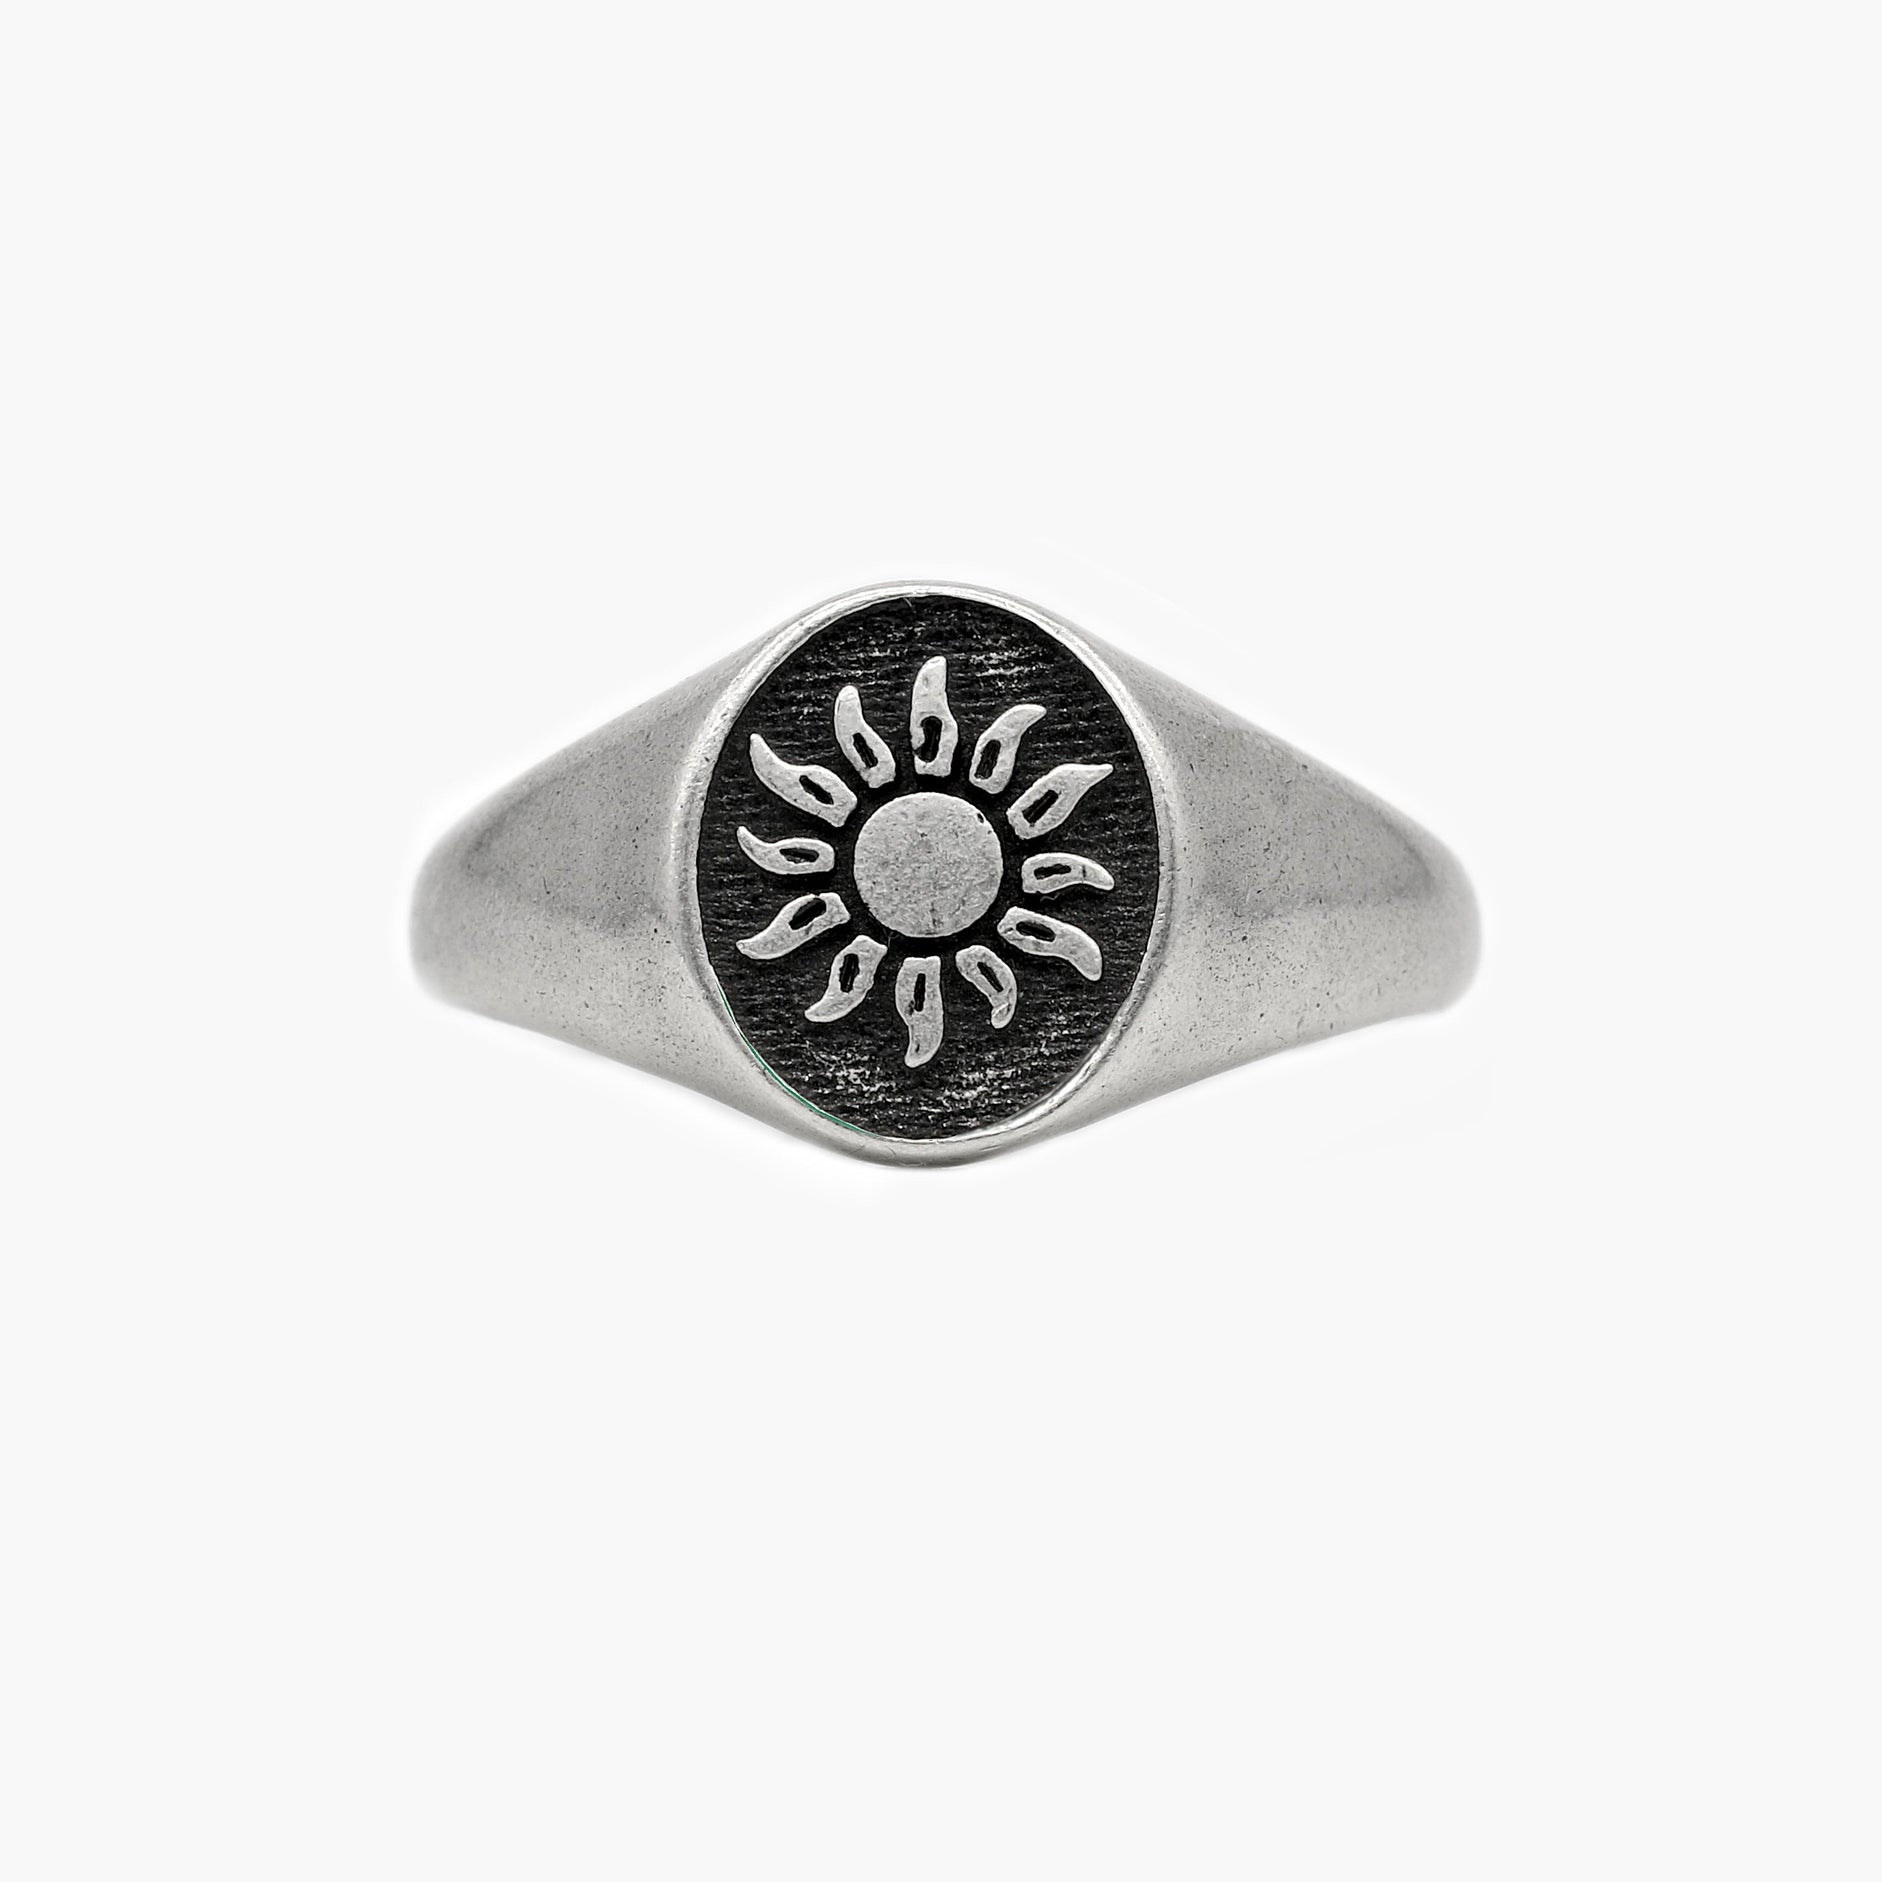 Sterling Silver Sunburst Ring With Aged Finish-Ring-Kompsós